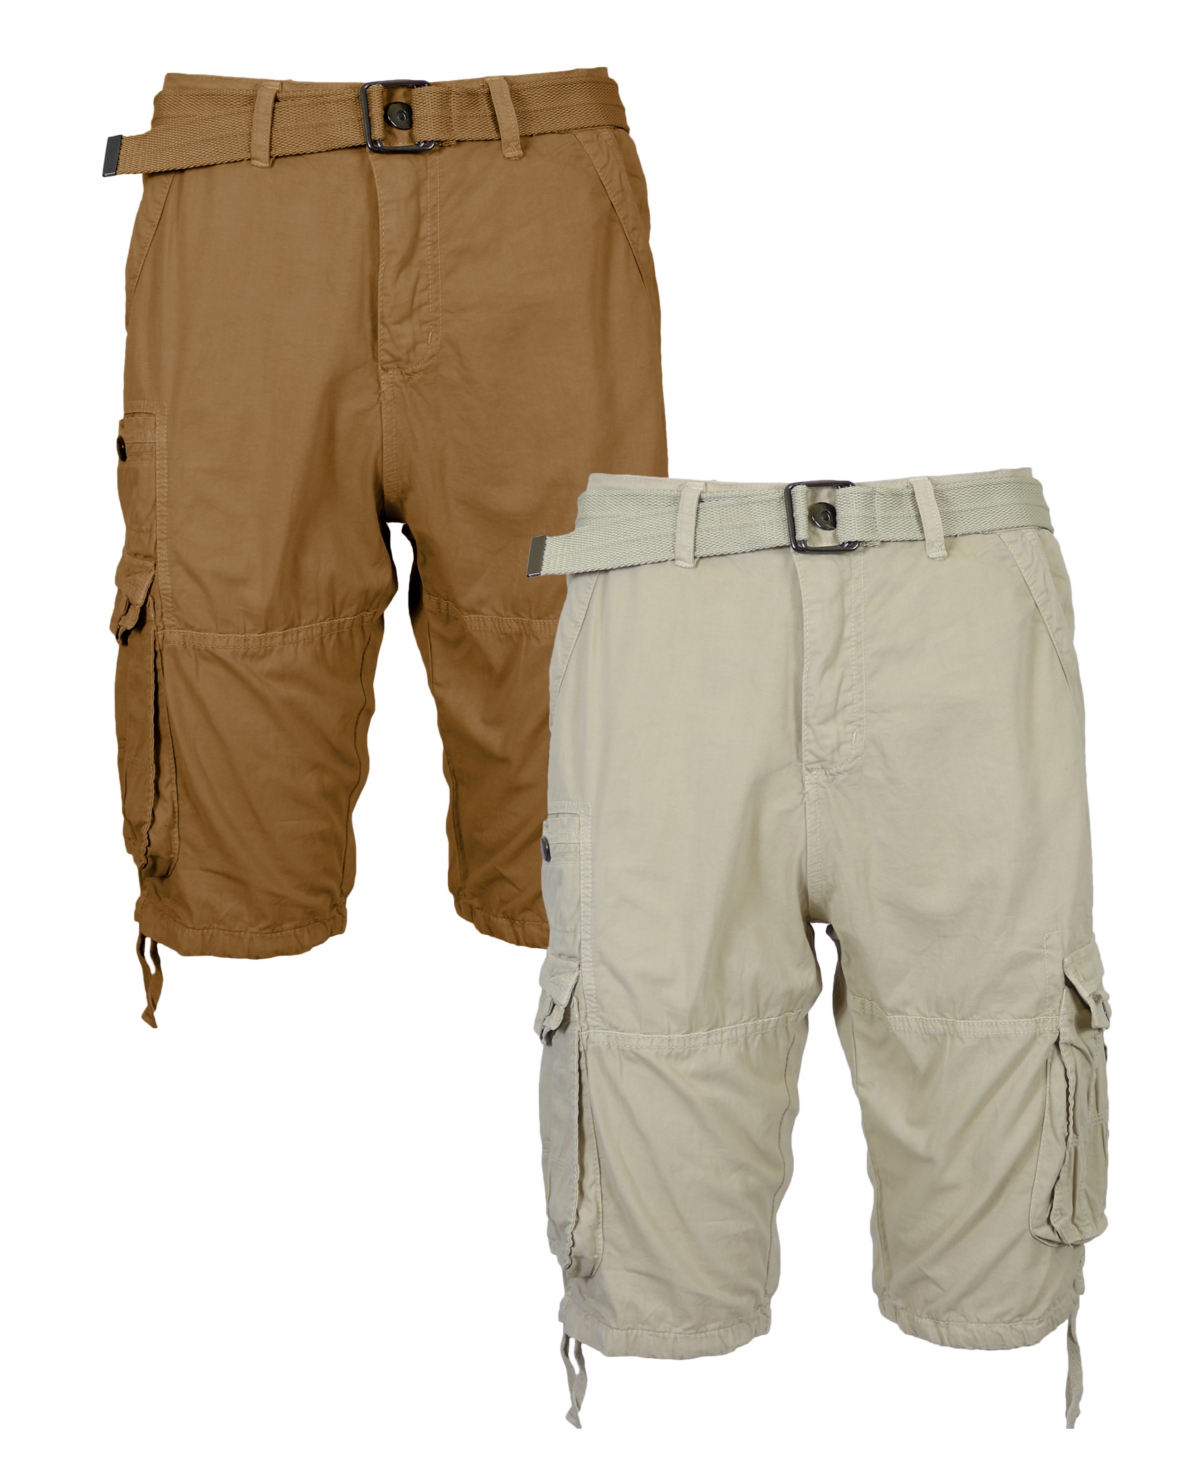 Men's Vintage-Like Cotton Cargo Belted Shorts, Pack of 2 - Olive-Light Khaki